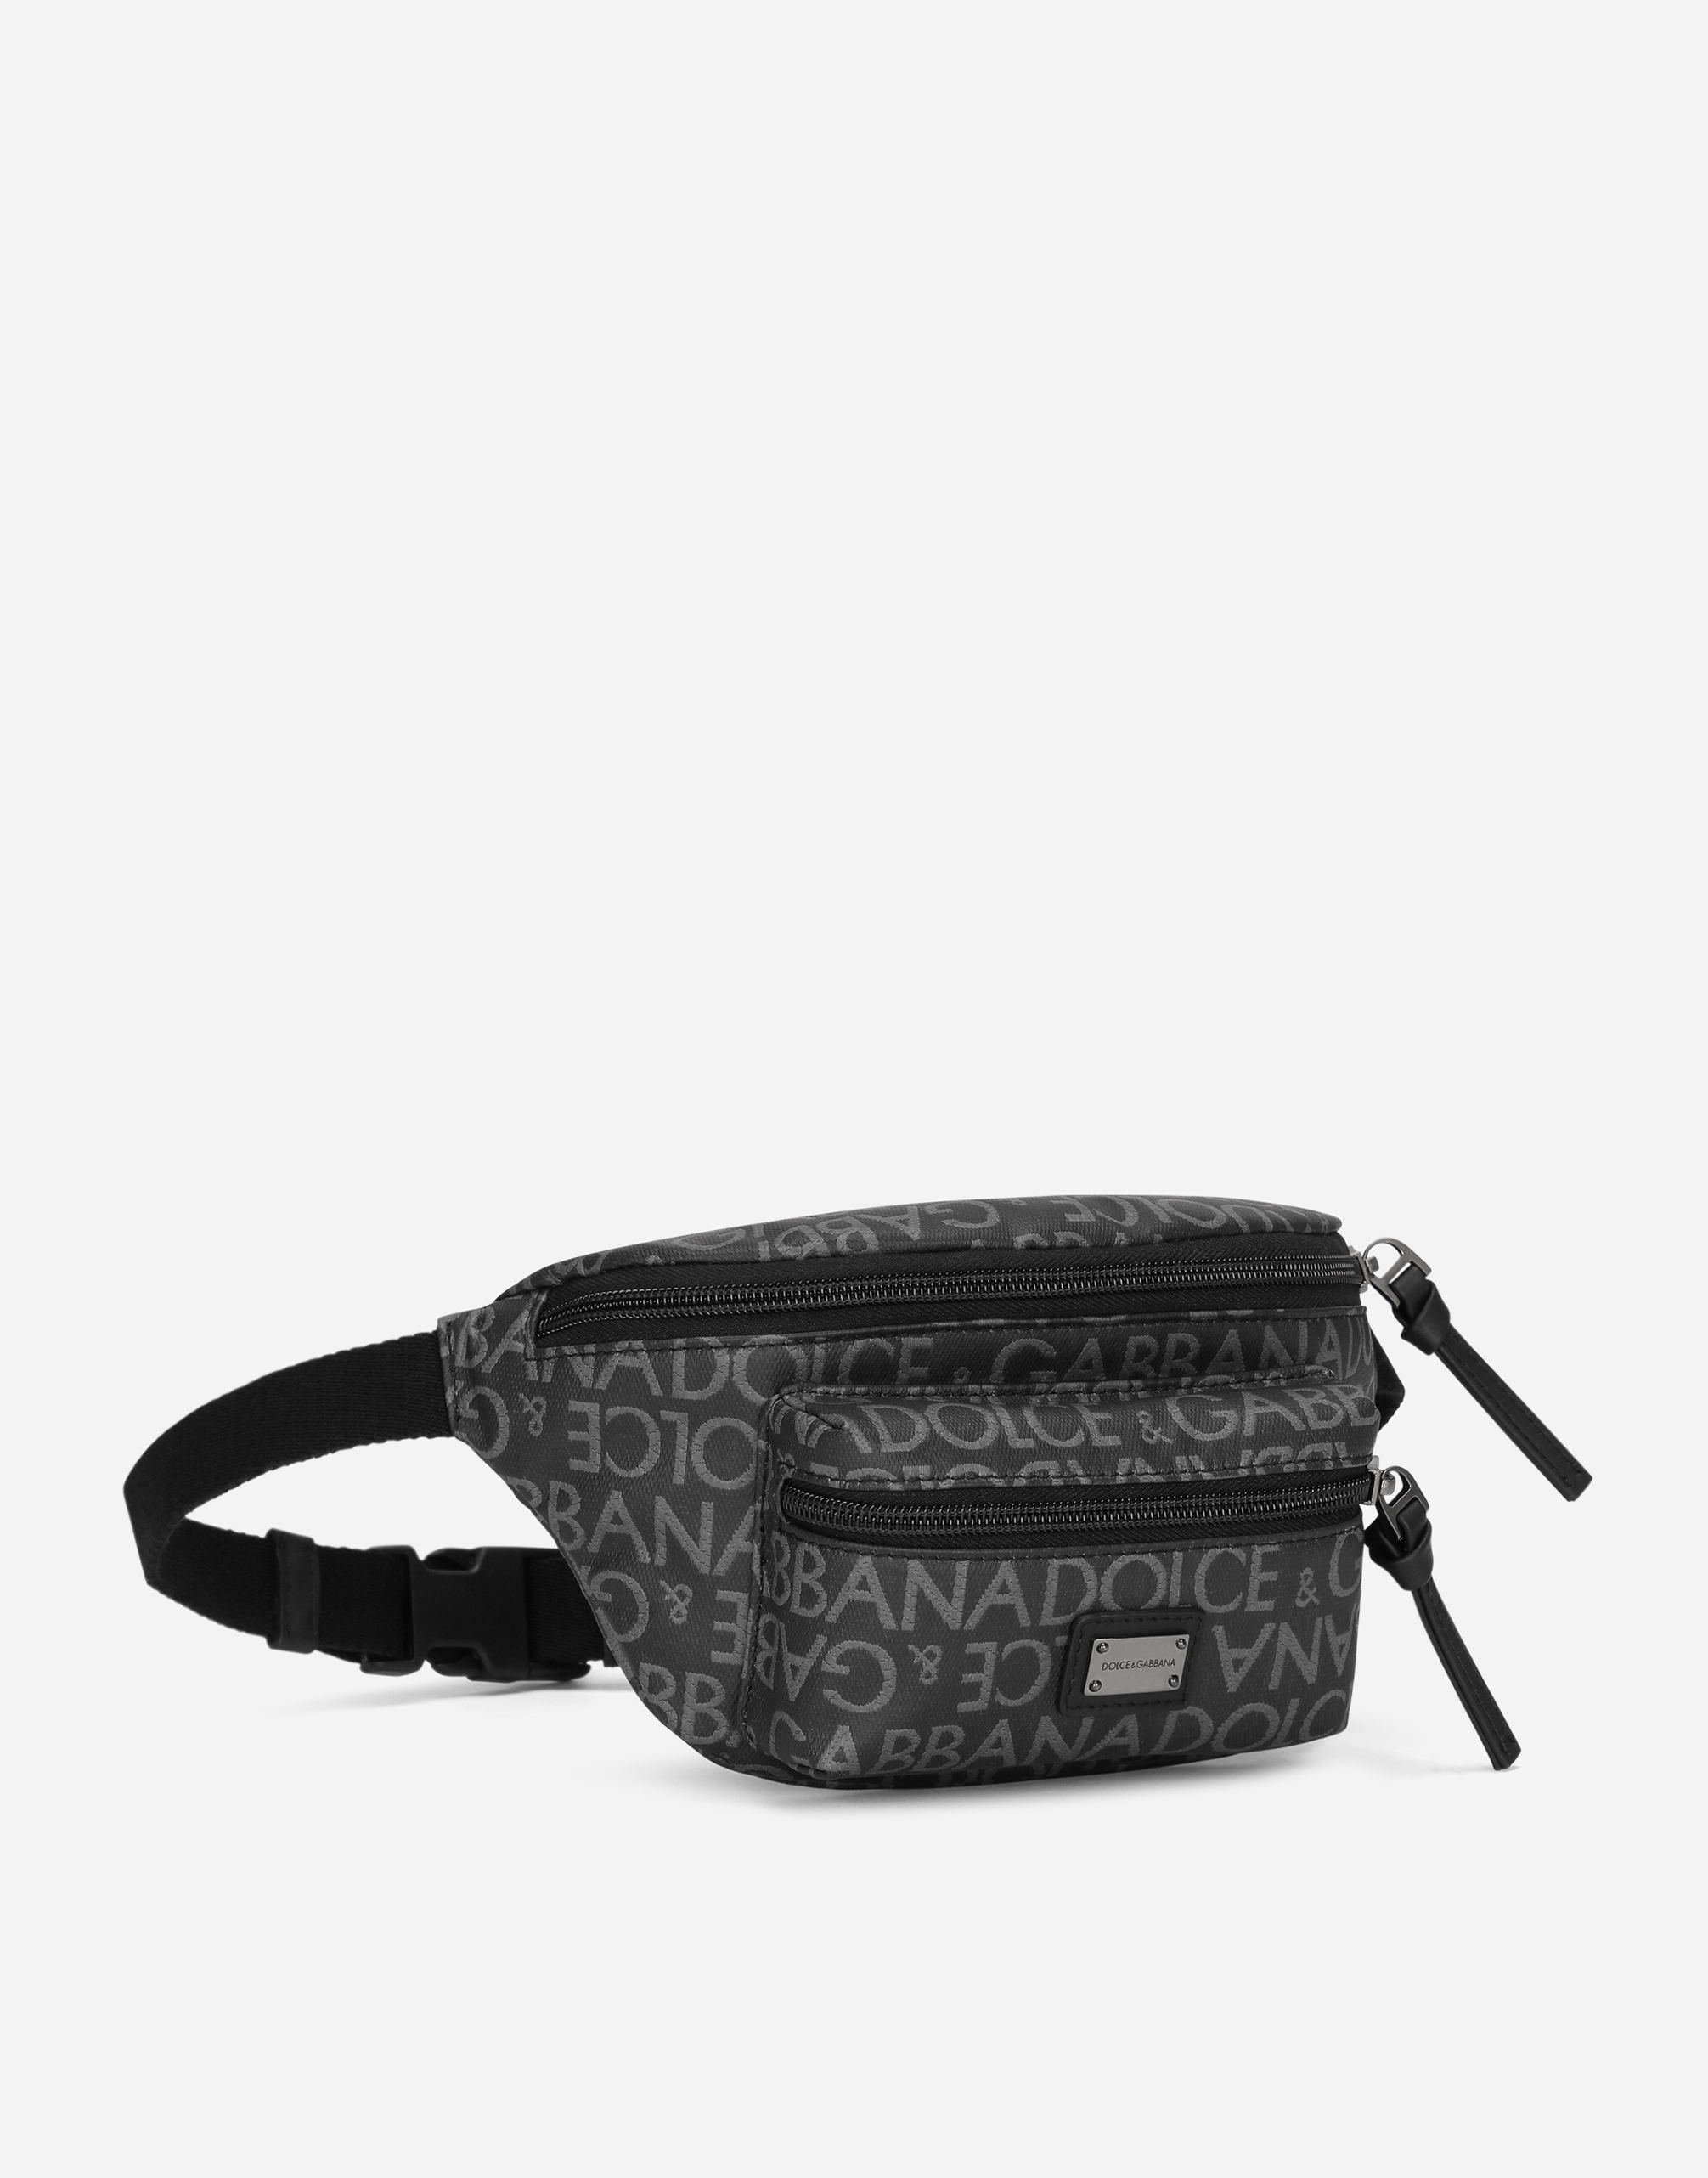 Dolce & Gabbana Men's Jacquard Backpack - Black - Backpacks